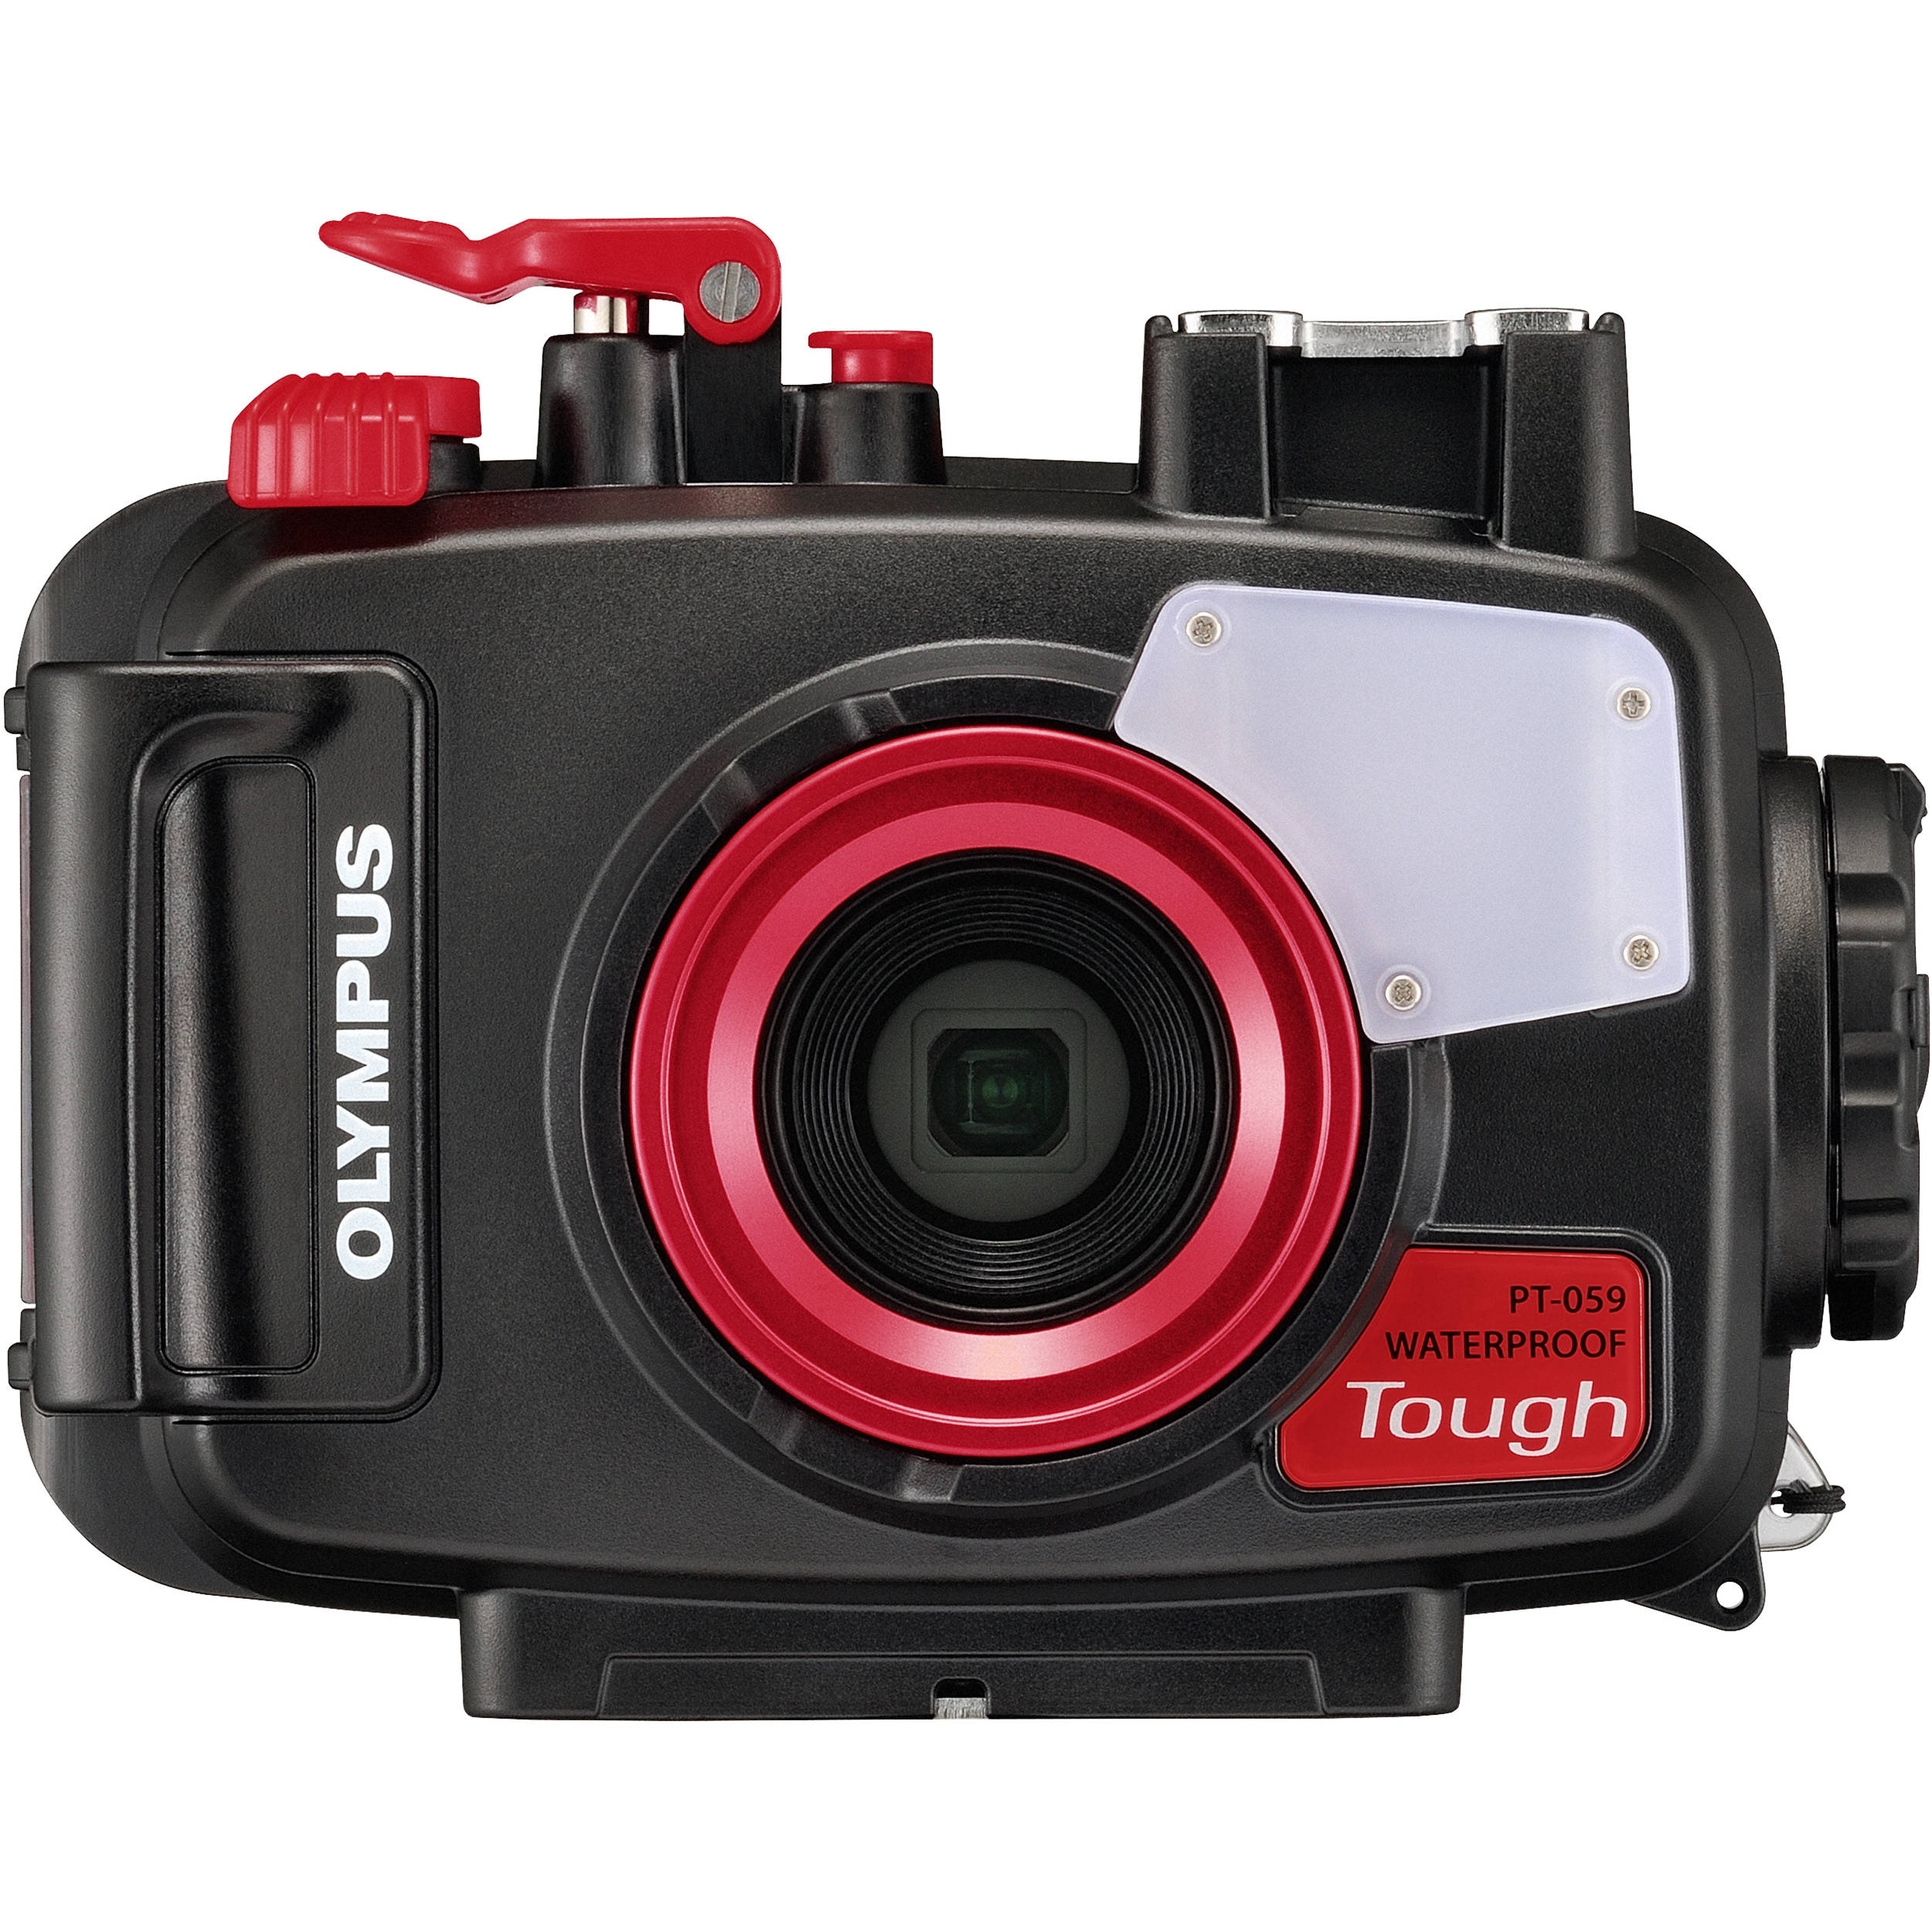 Sensei Lens Protector for Olympus Tough TG Series Cameras